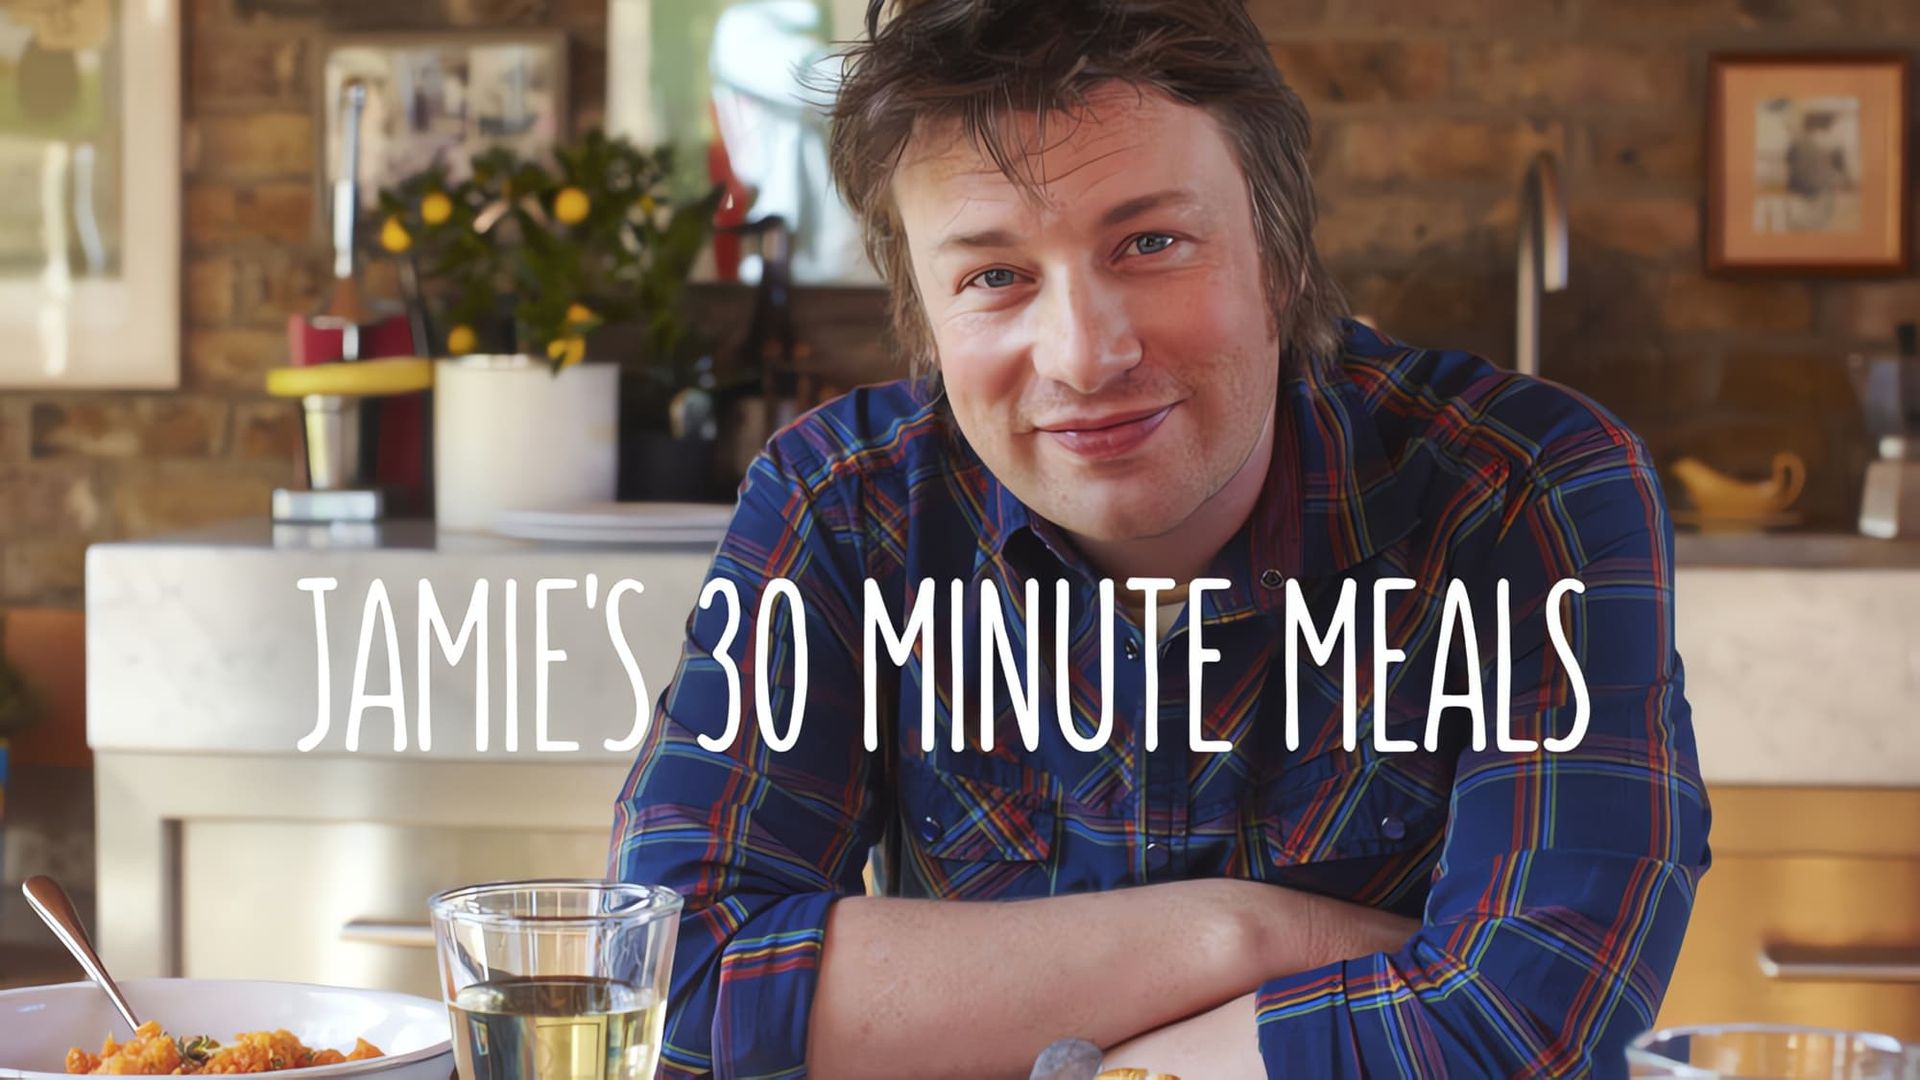 Jamie's 30 Minute Meals background